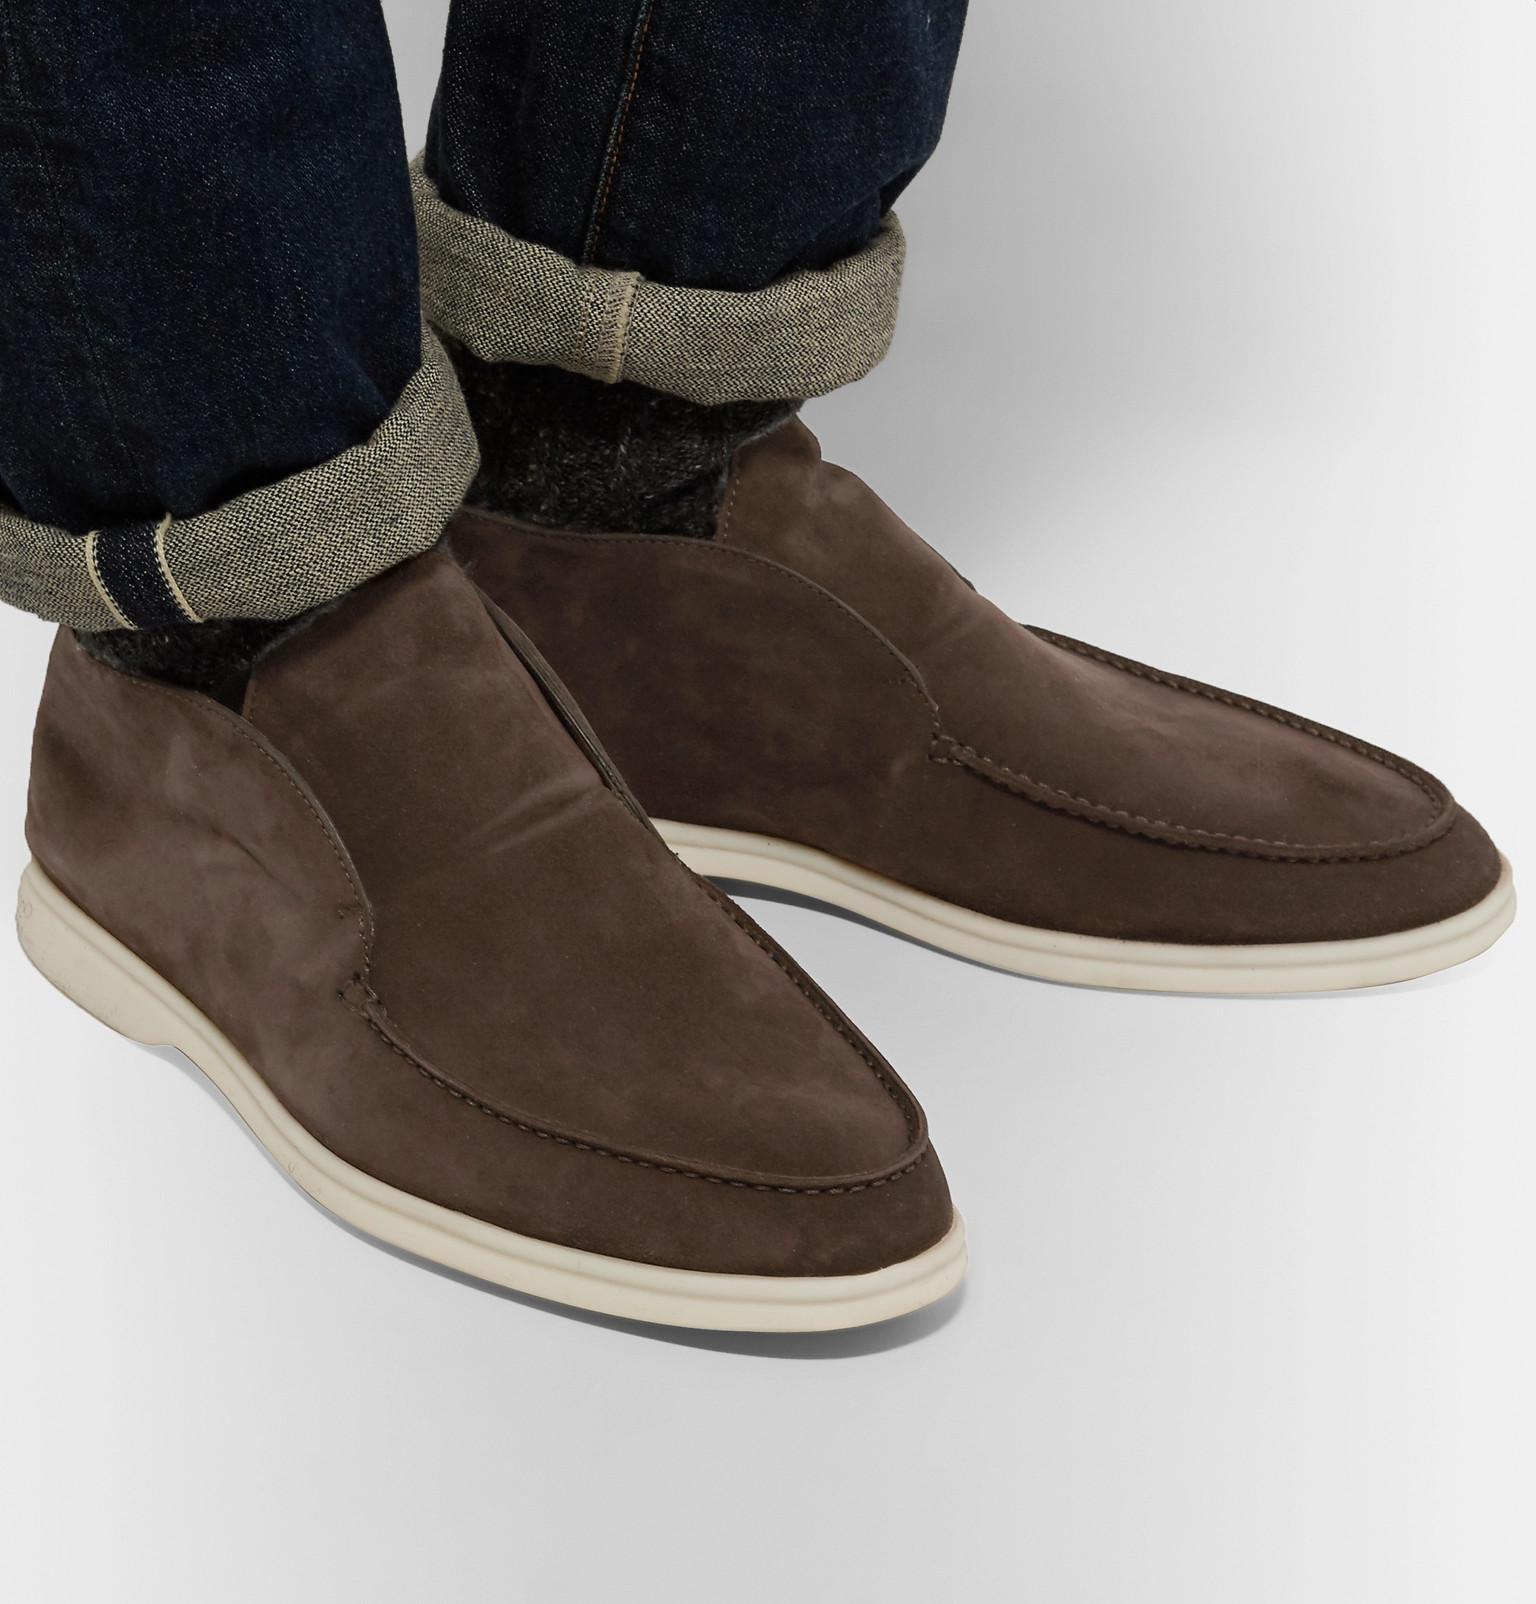 Loro Piana Open Walk Suede Boots in Dark Brown (Brown) for Men - Lyst